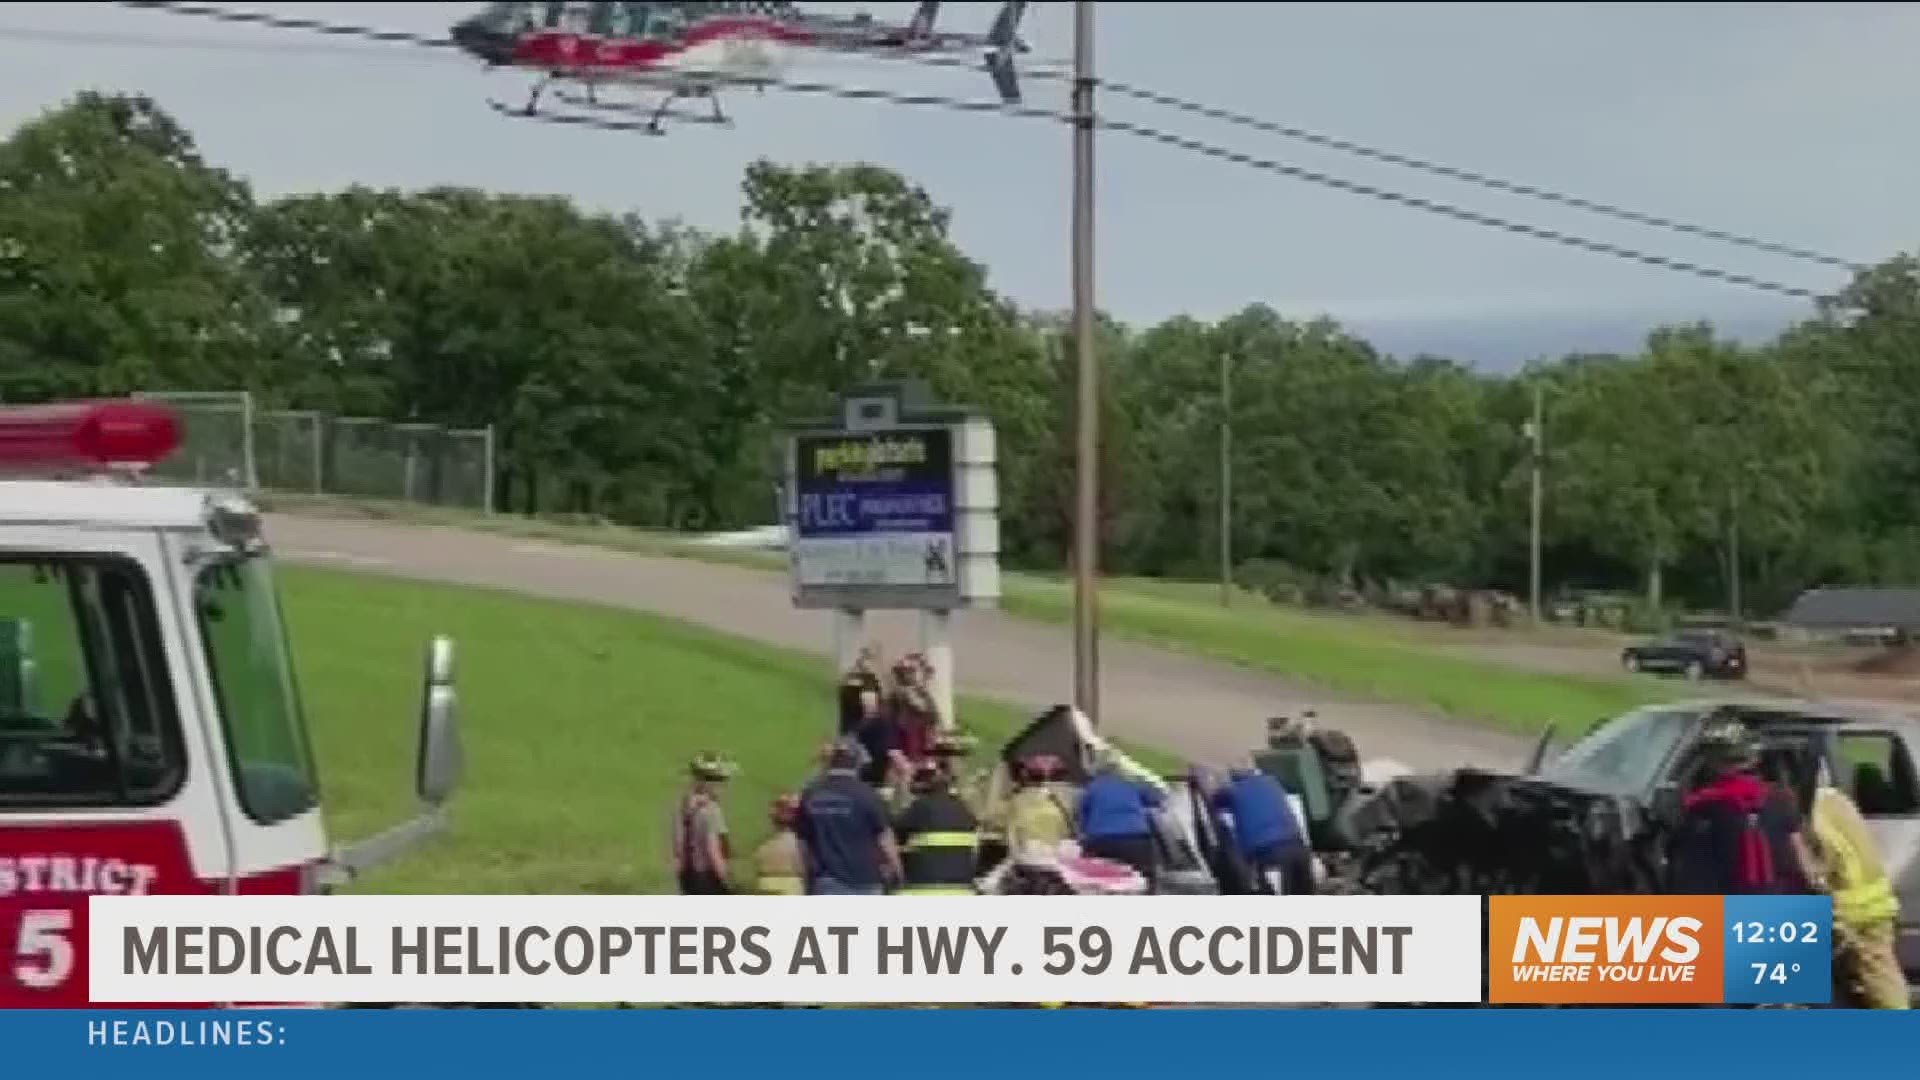 The accident occurred on Hwy. 59 north of Van Buren Monday (June 21) night.